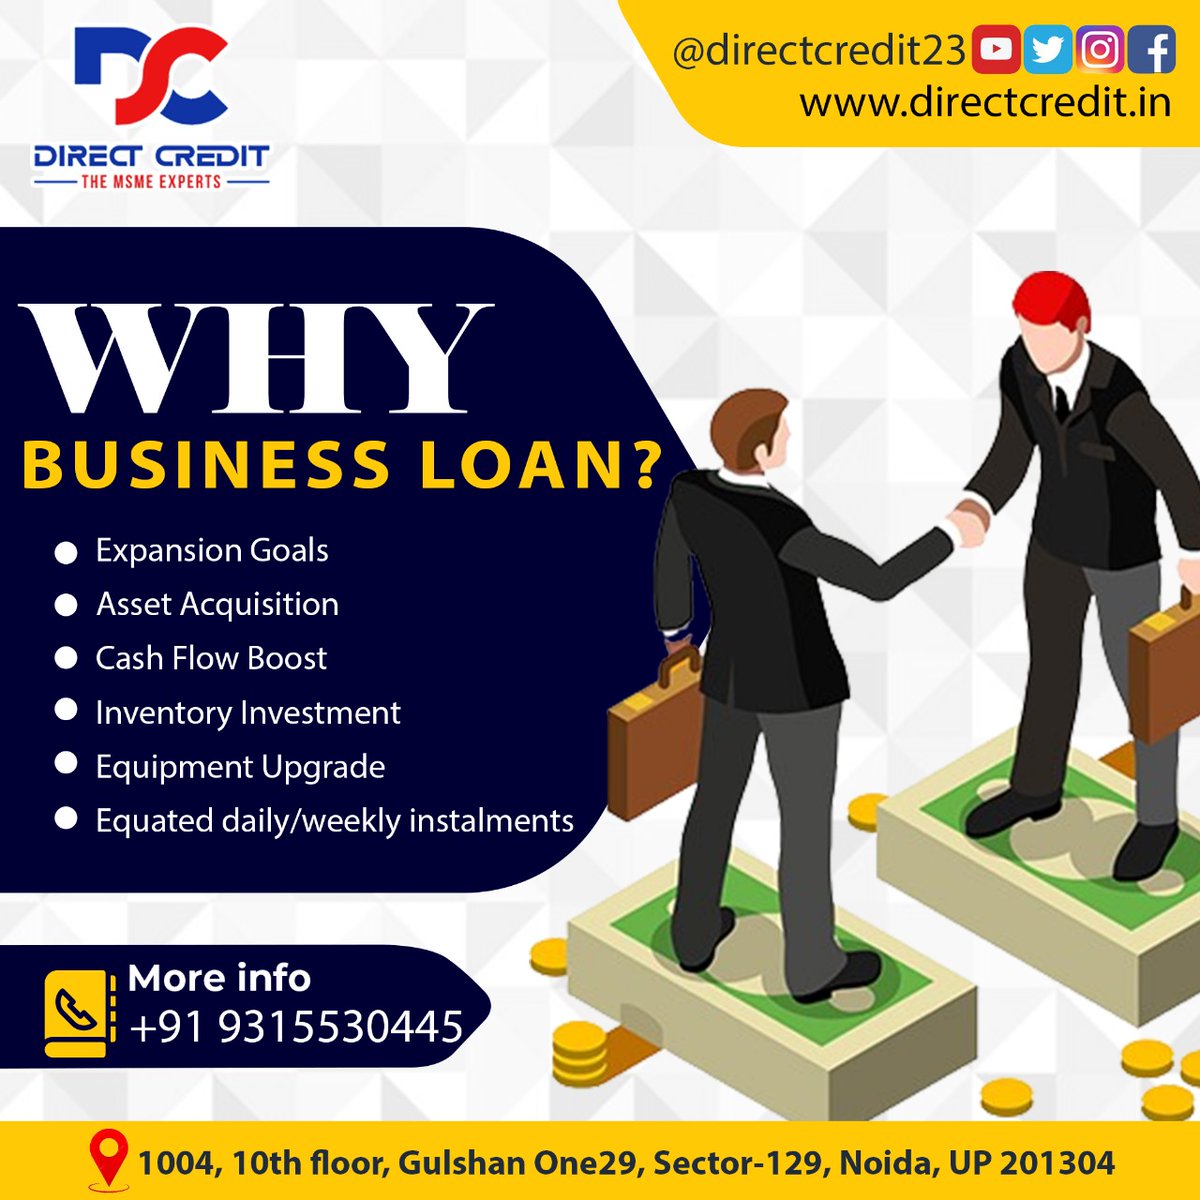 #businessloans #loans #business #businessfunding #smallbusiness #finance #creditrepair #personalloans #businessloan #funding #DirectCredit #Loanmaster